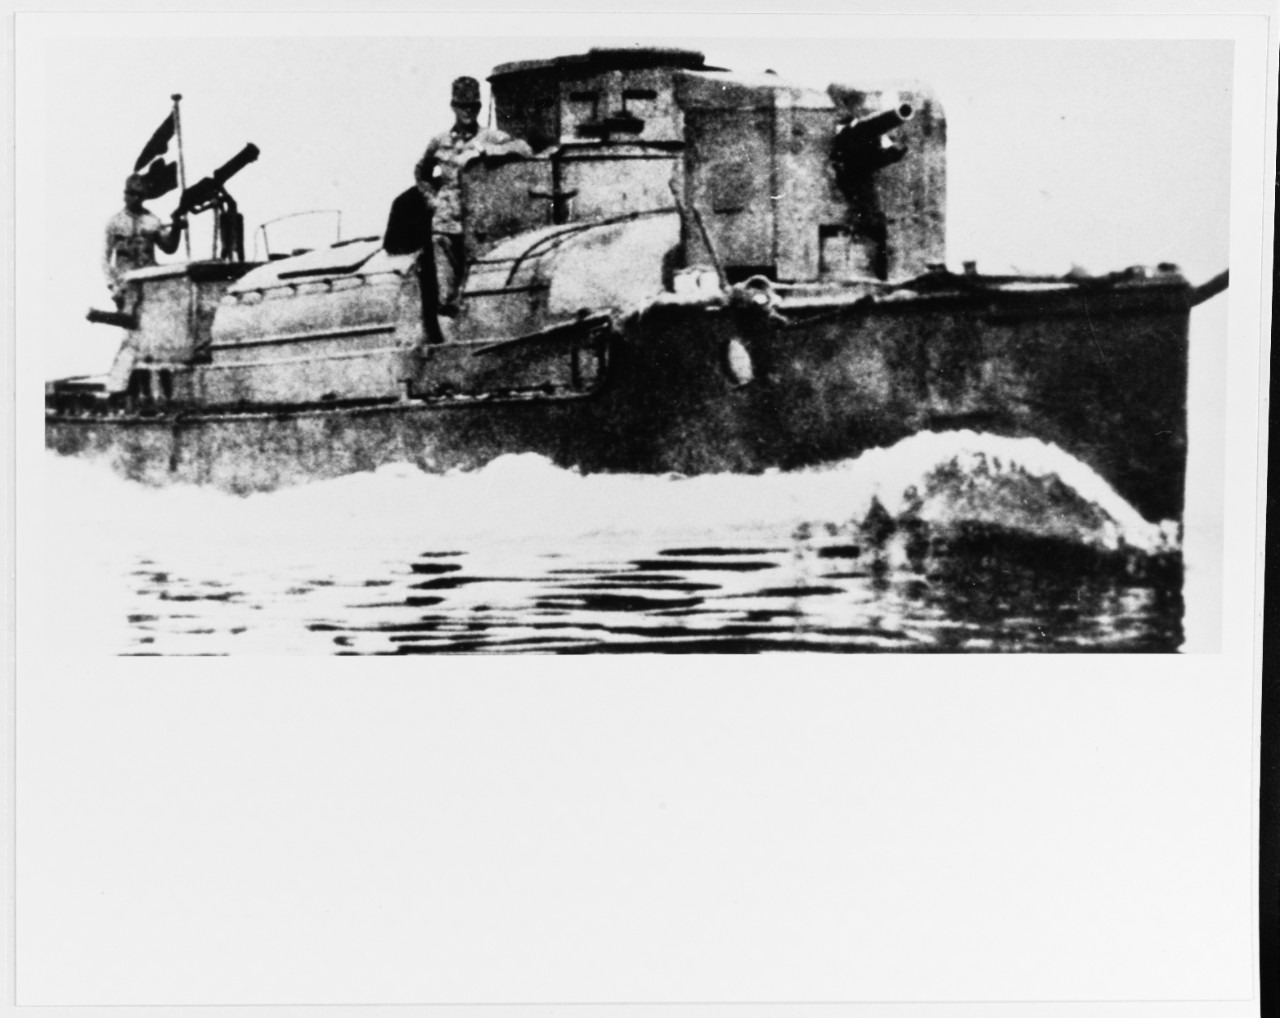 LINZ Austrian Armored Motor Boat, 1915